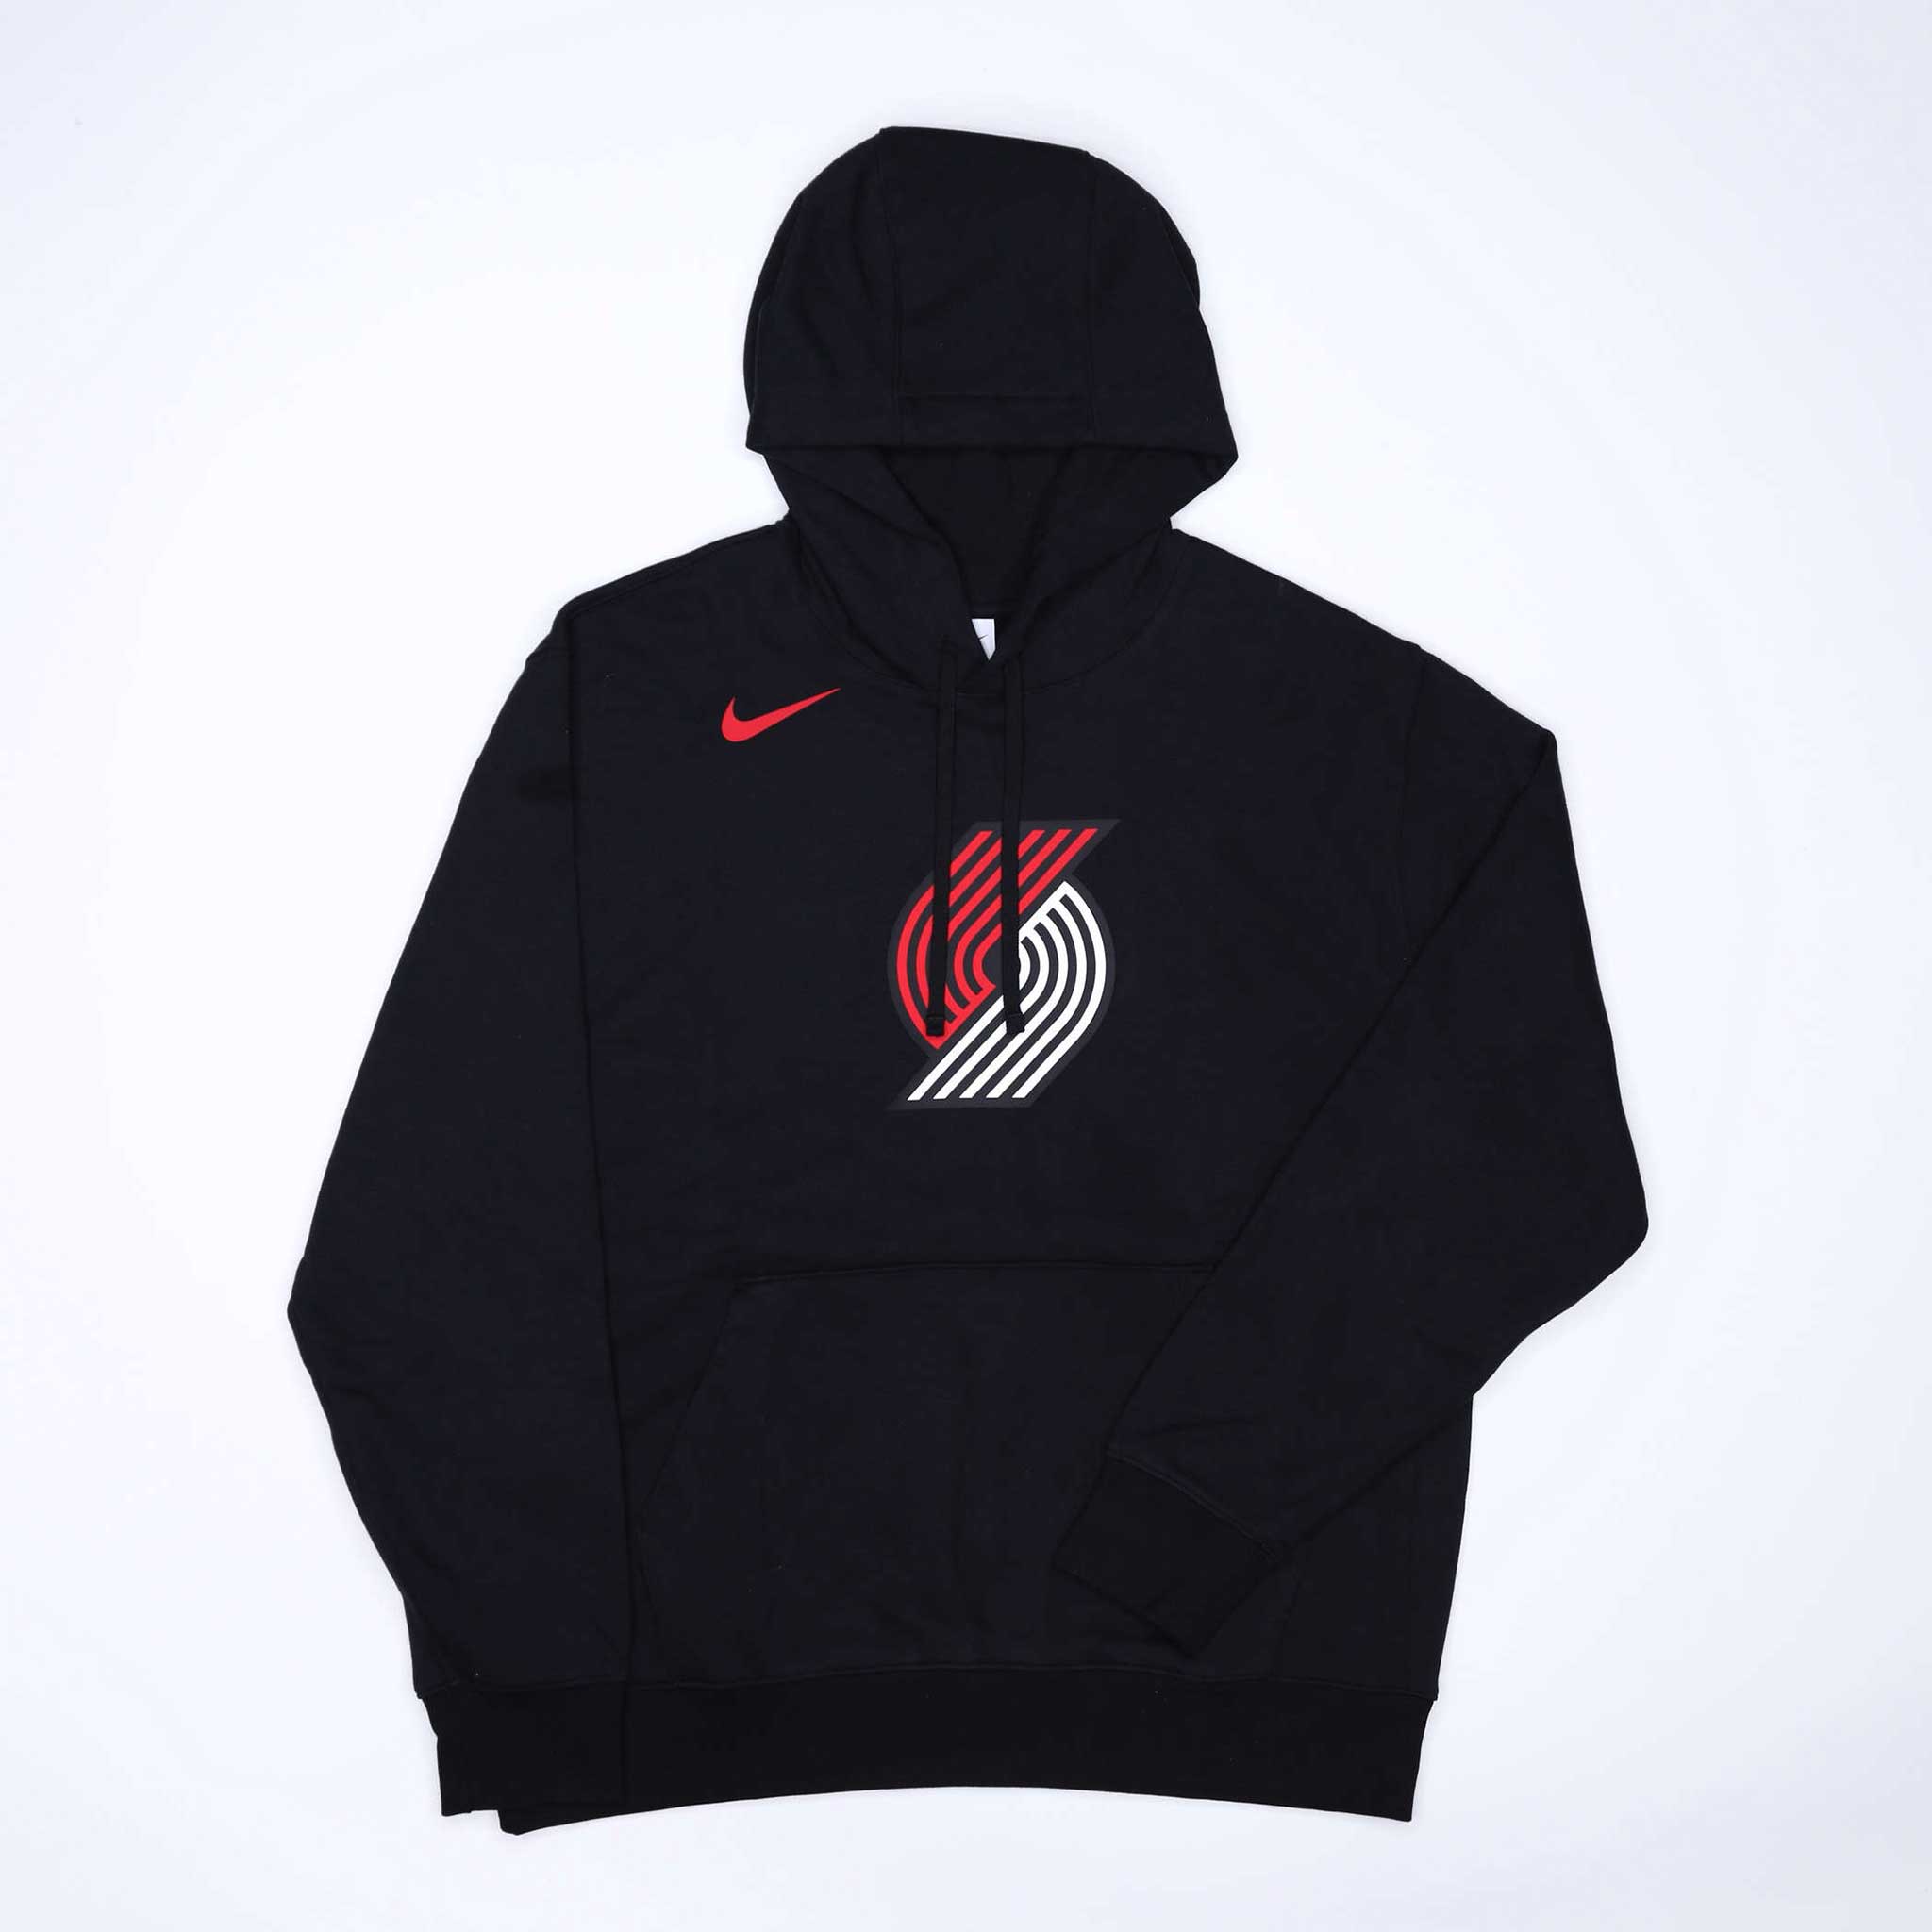 Nike Damian Lillard Swingman Icon Jersey  Rip City Clothing - The Official  Blazers Team Store